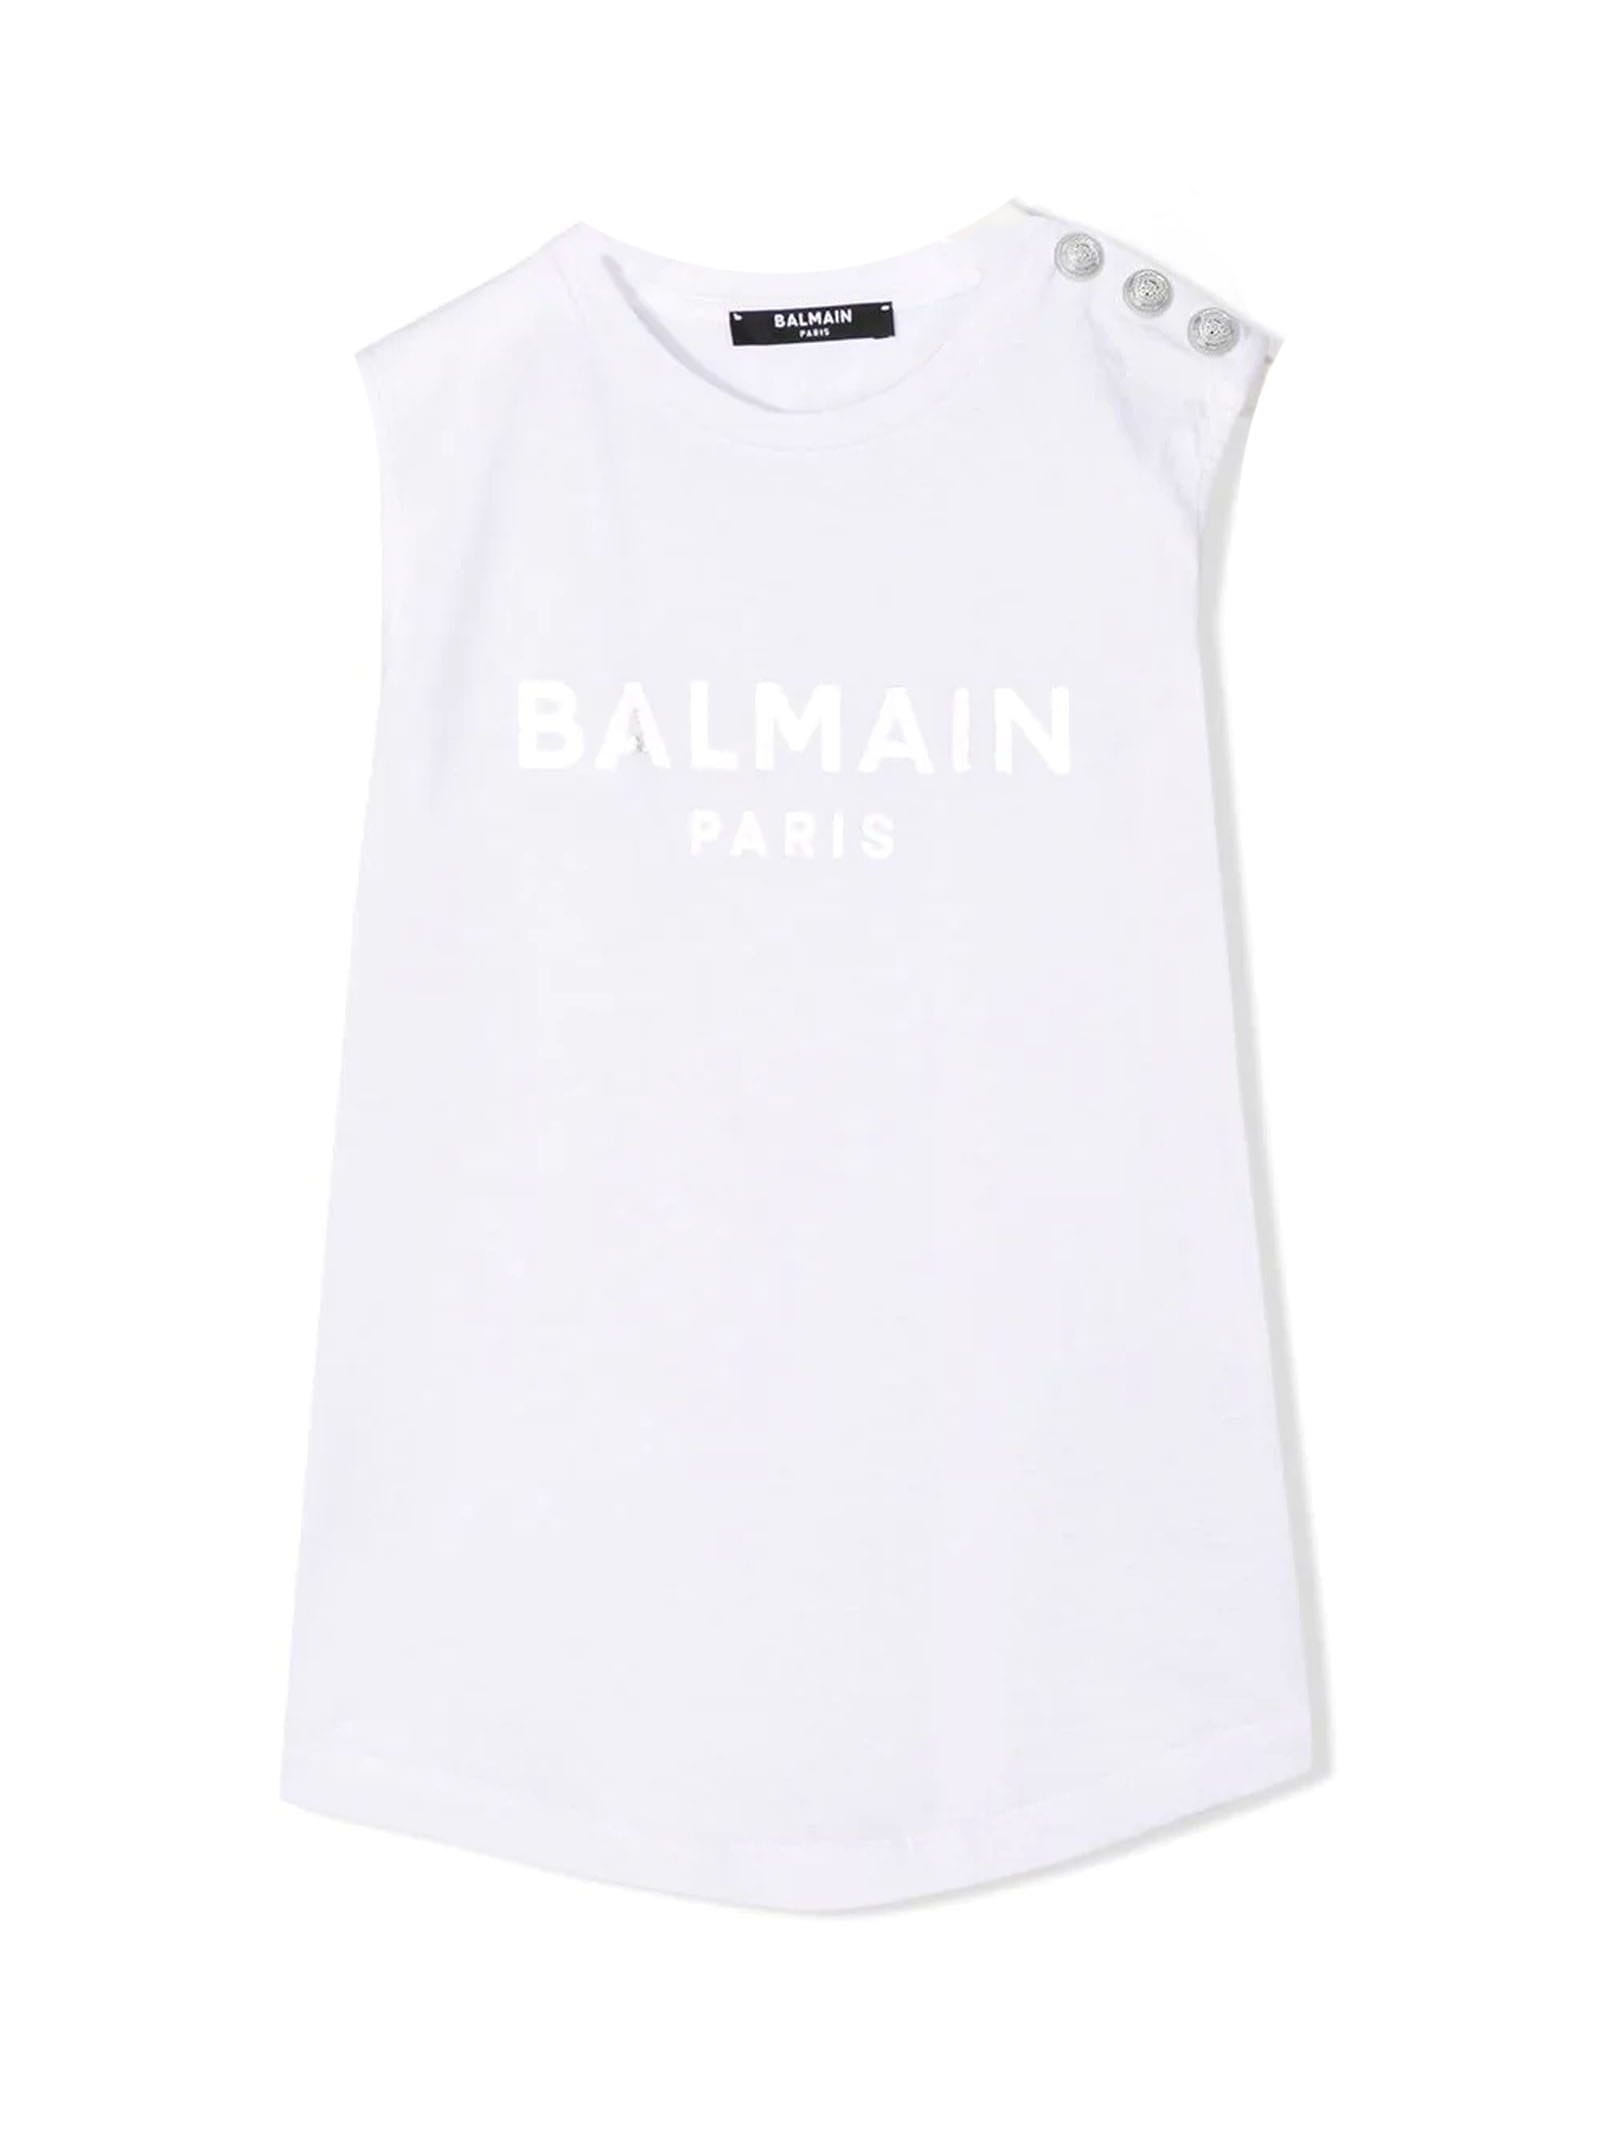 Balmain White Cotton Sleeveless T-shirt